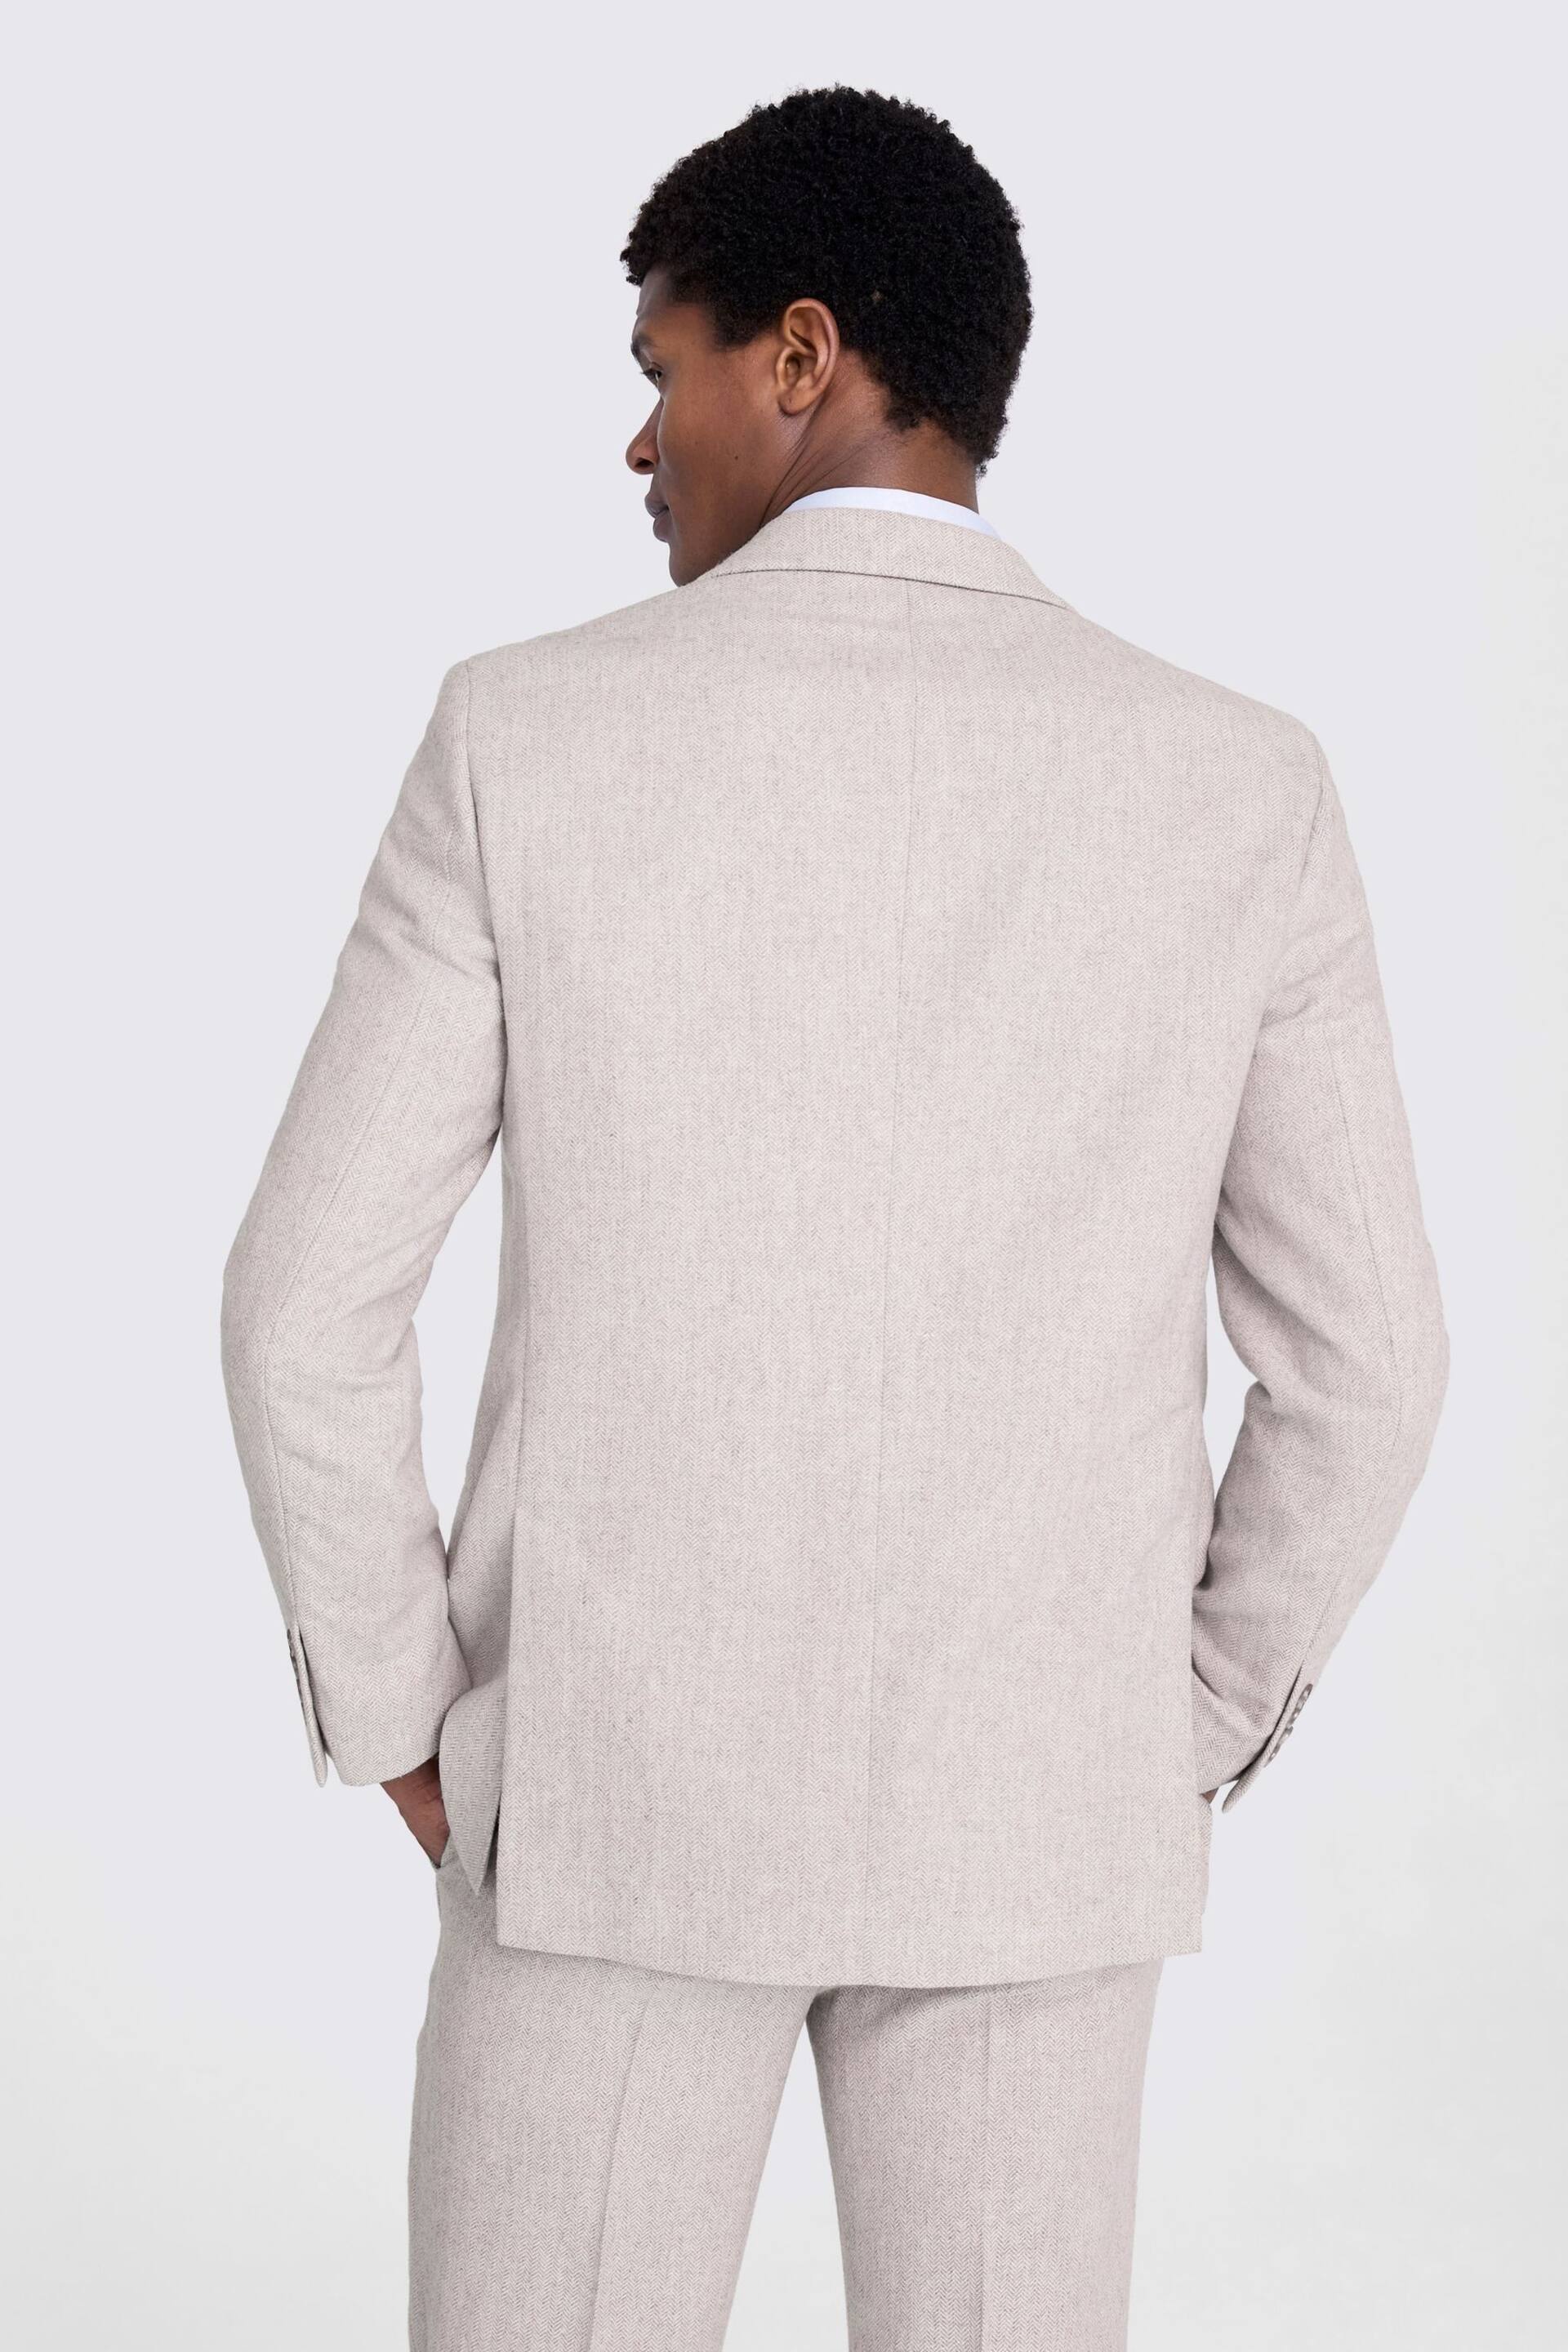 MOSS Tailored Fit Light Grey Herringbone Suit: Jacket - Image 2 of 5